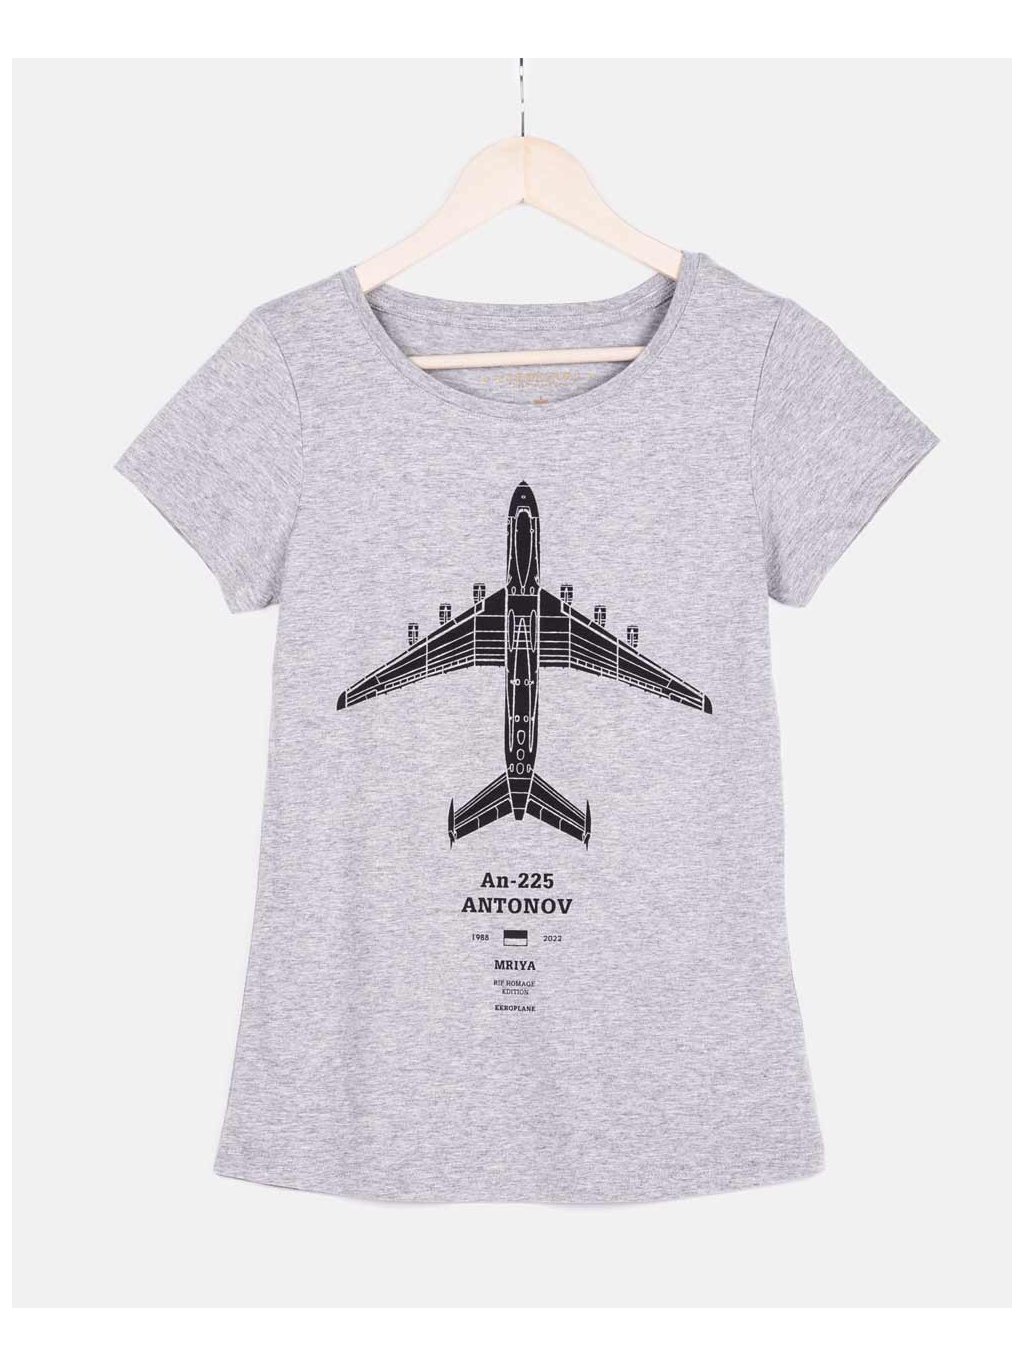 womens aviation t shirt mriya antonov225 heather gray eeroplane